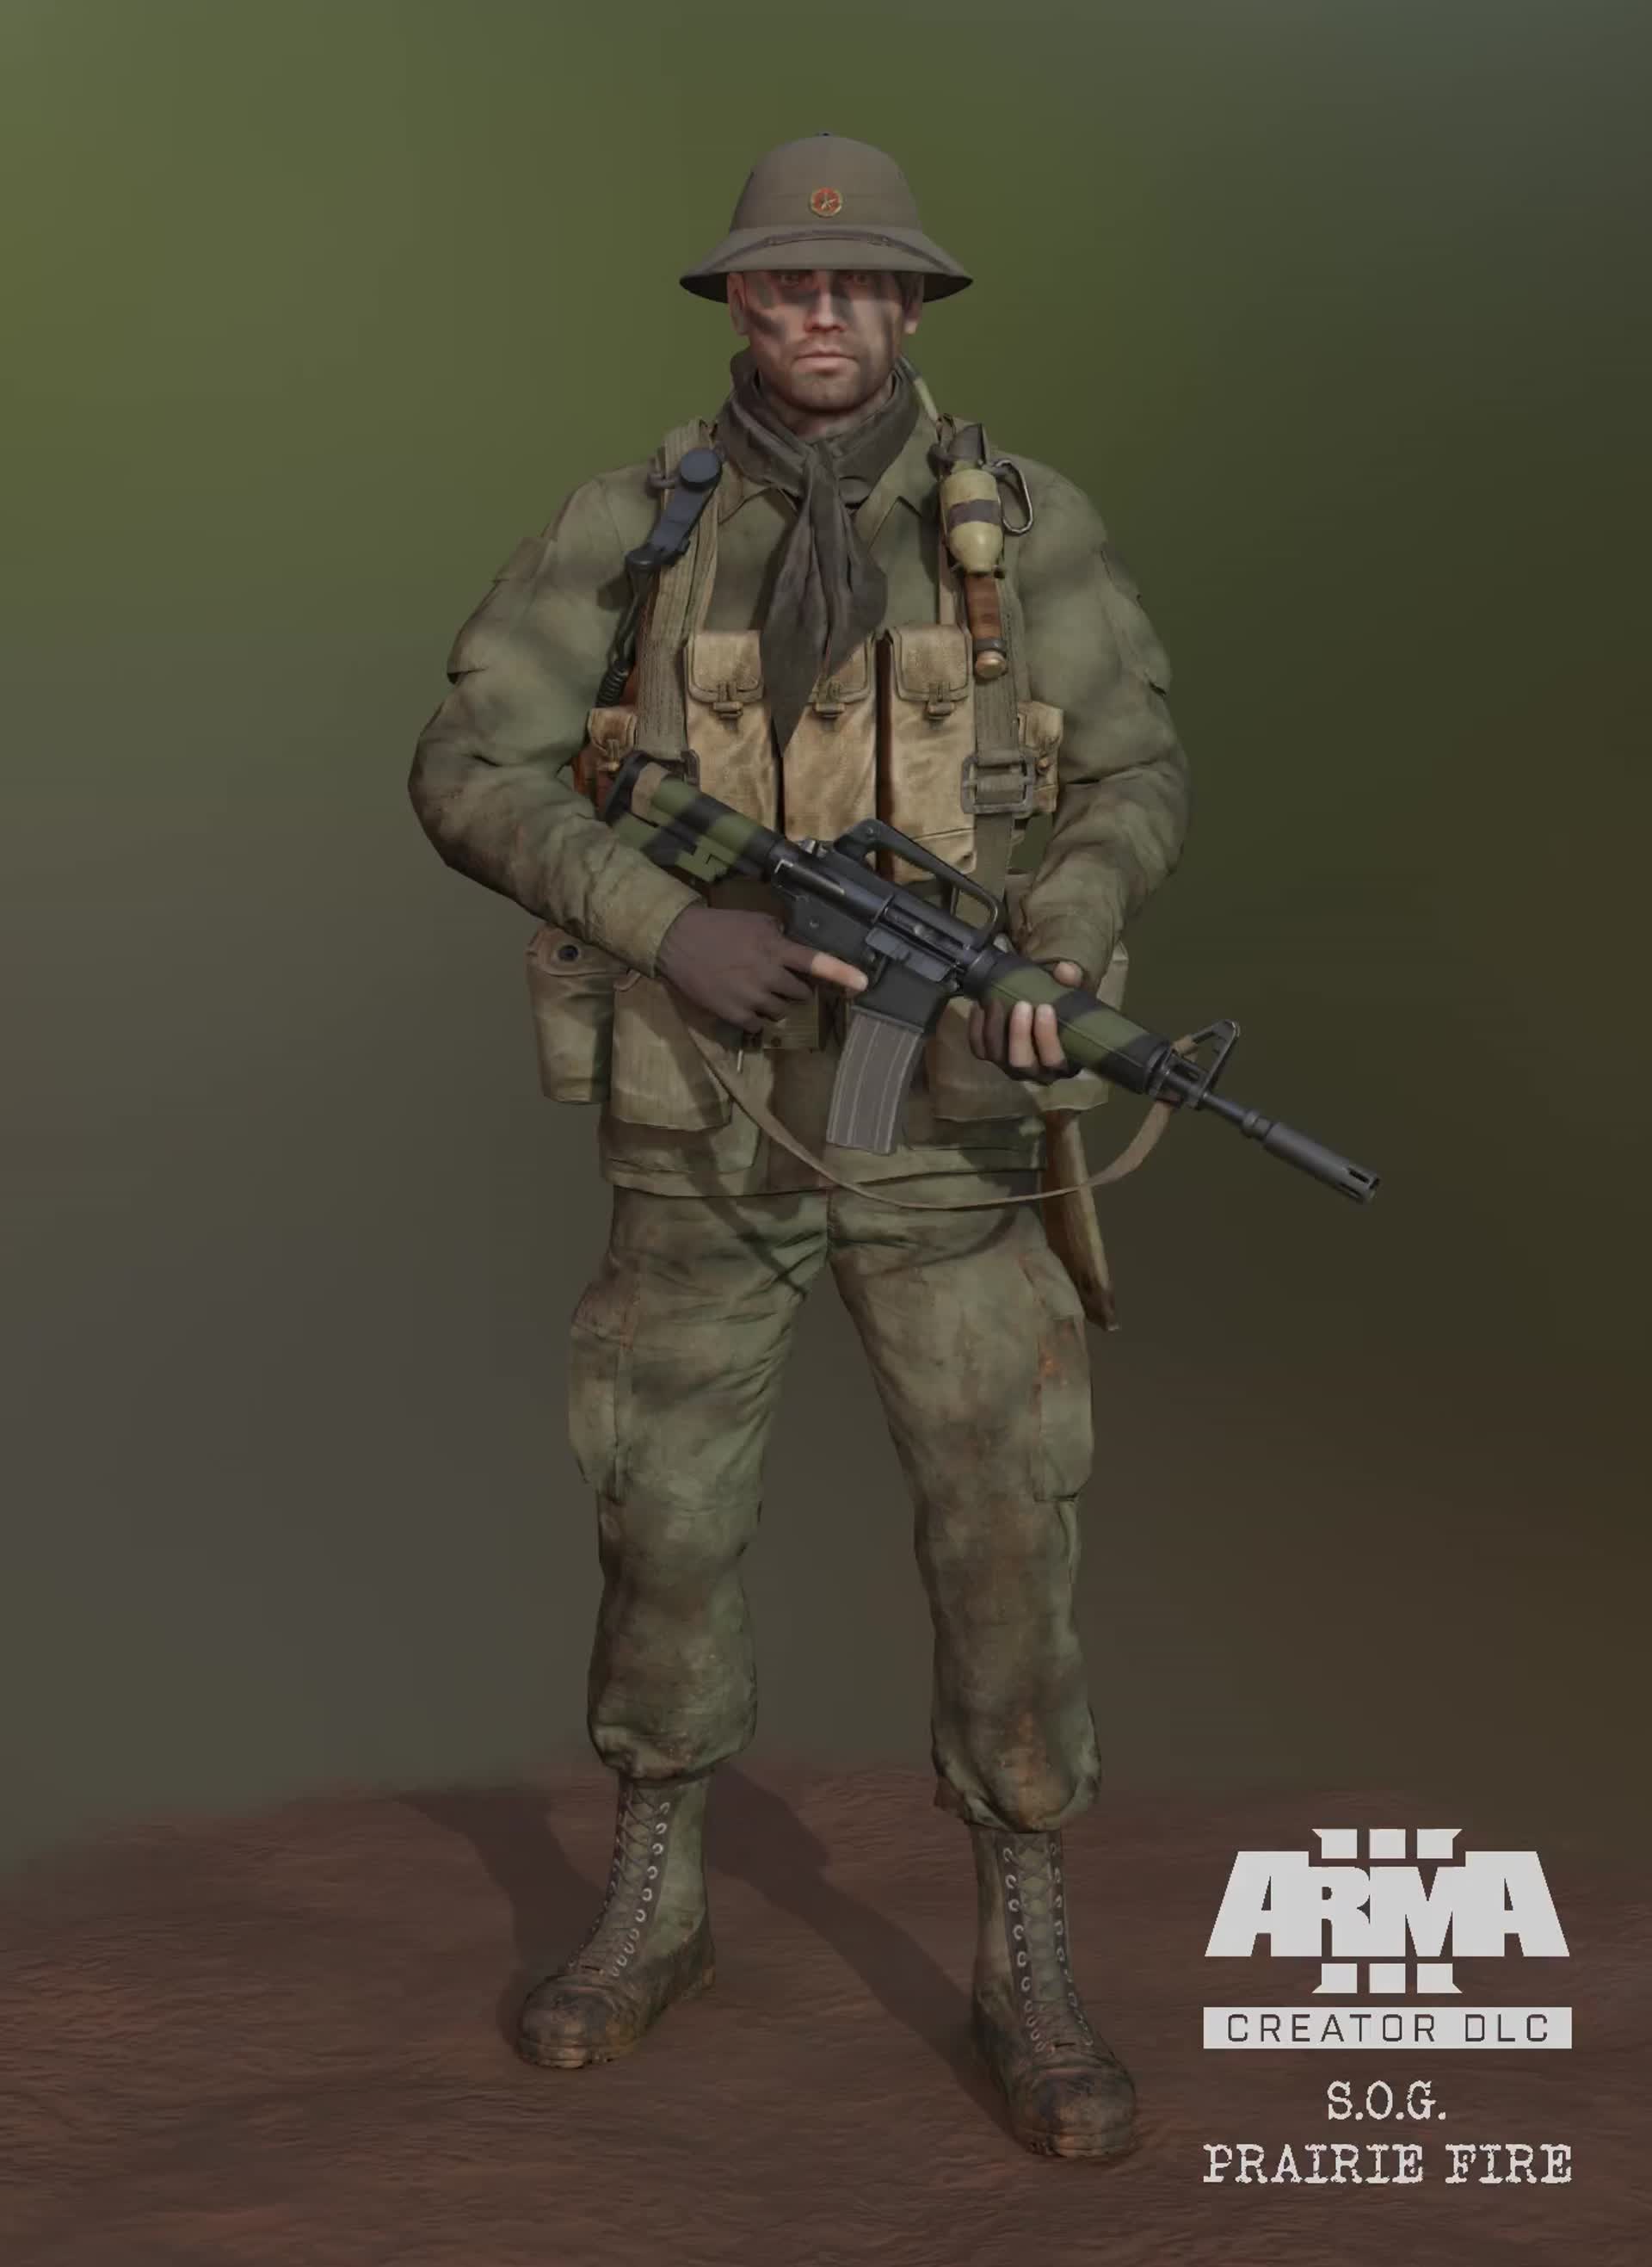 Arma 3 is going to Vietnam